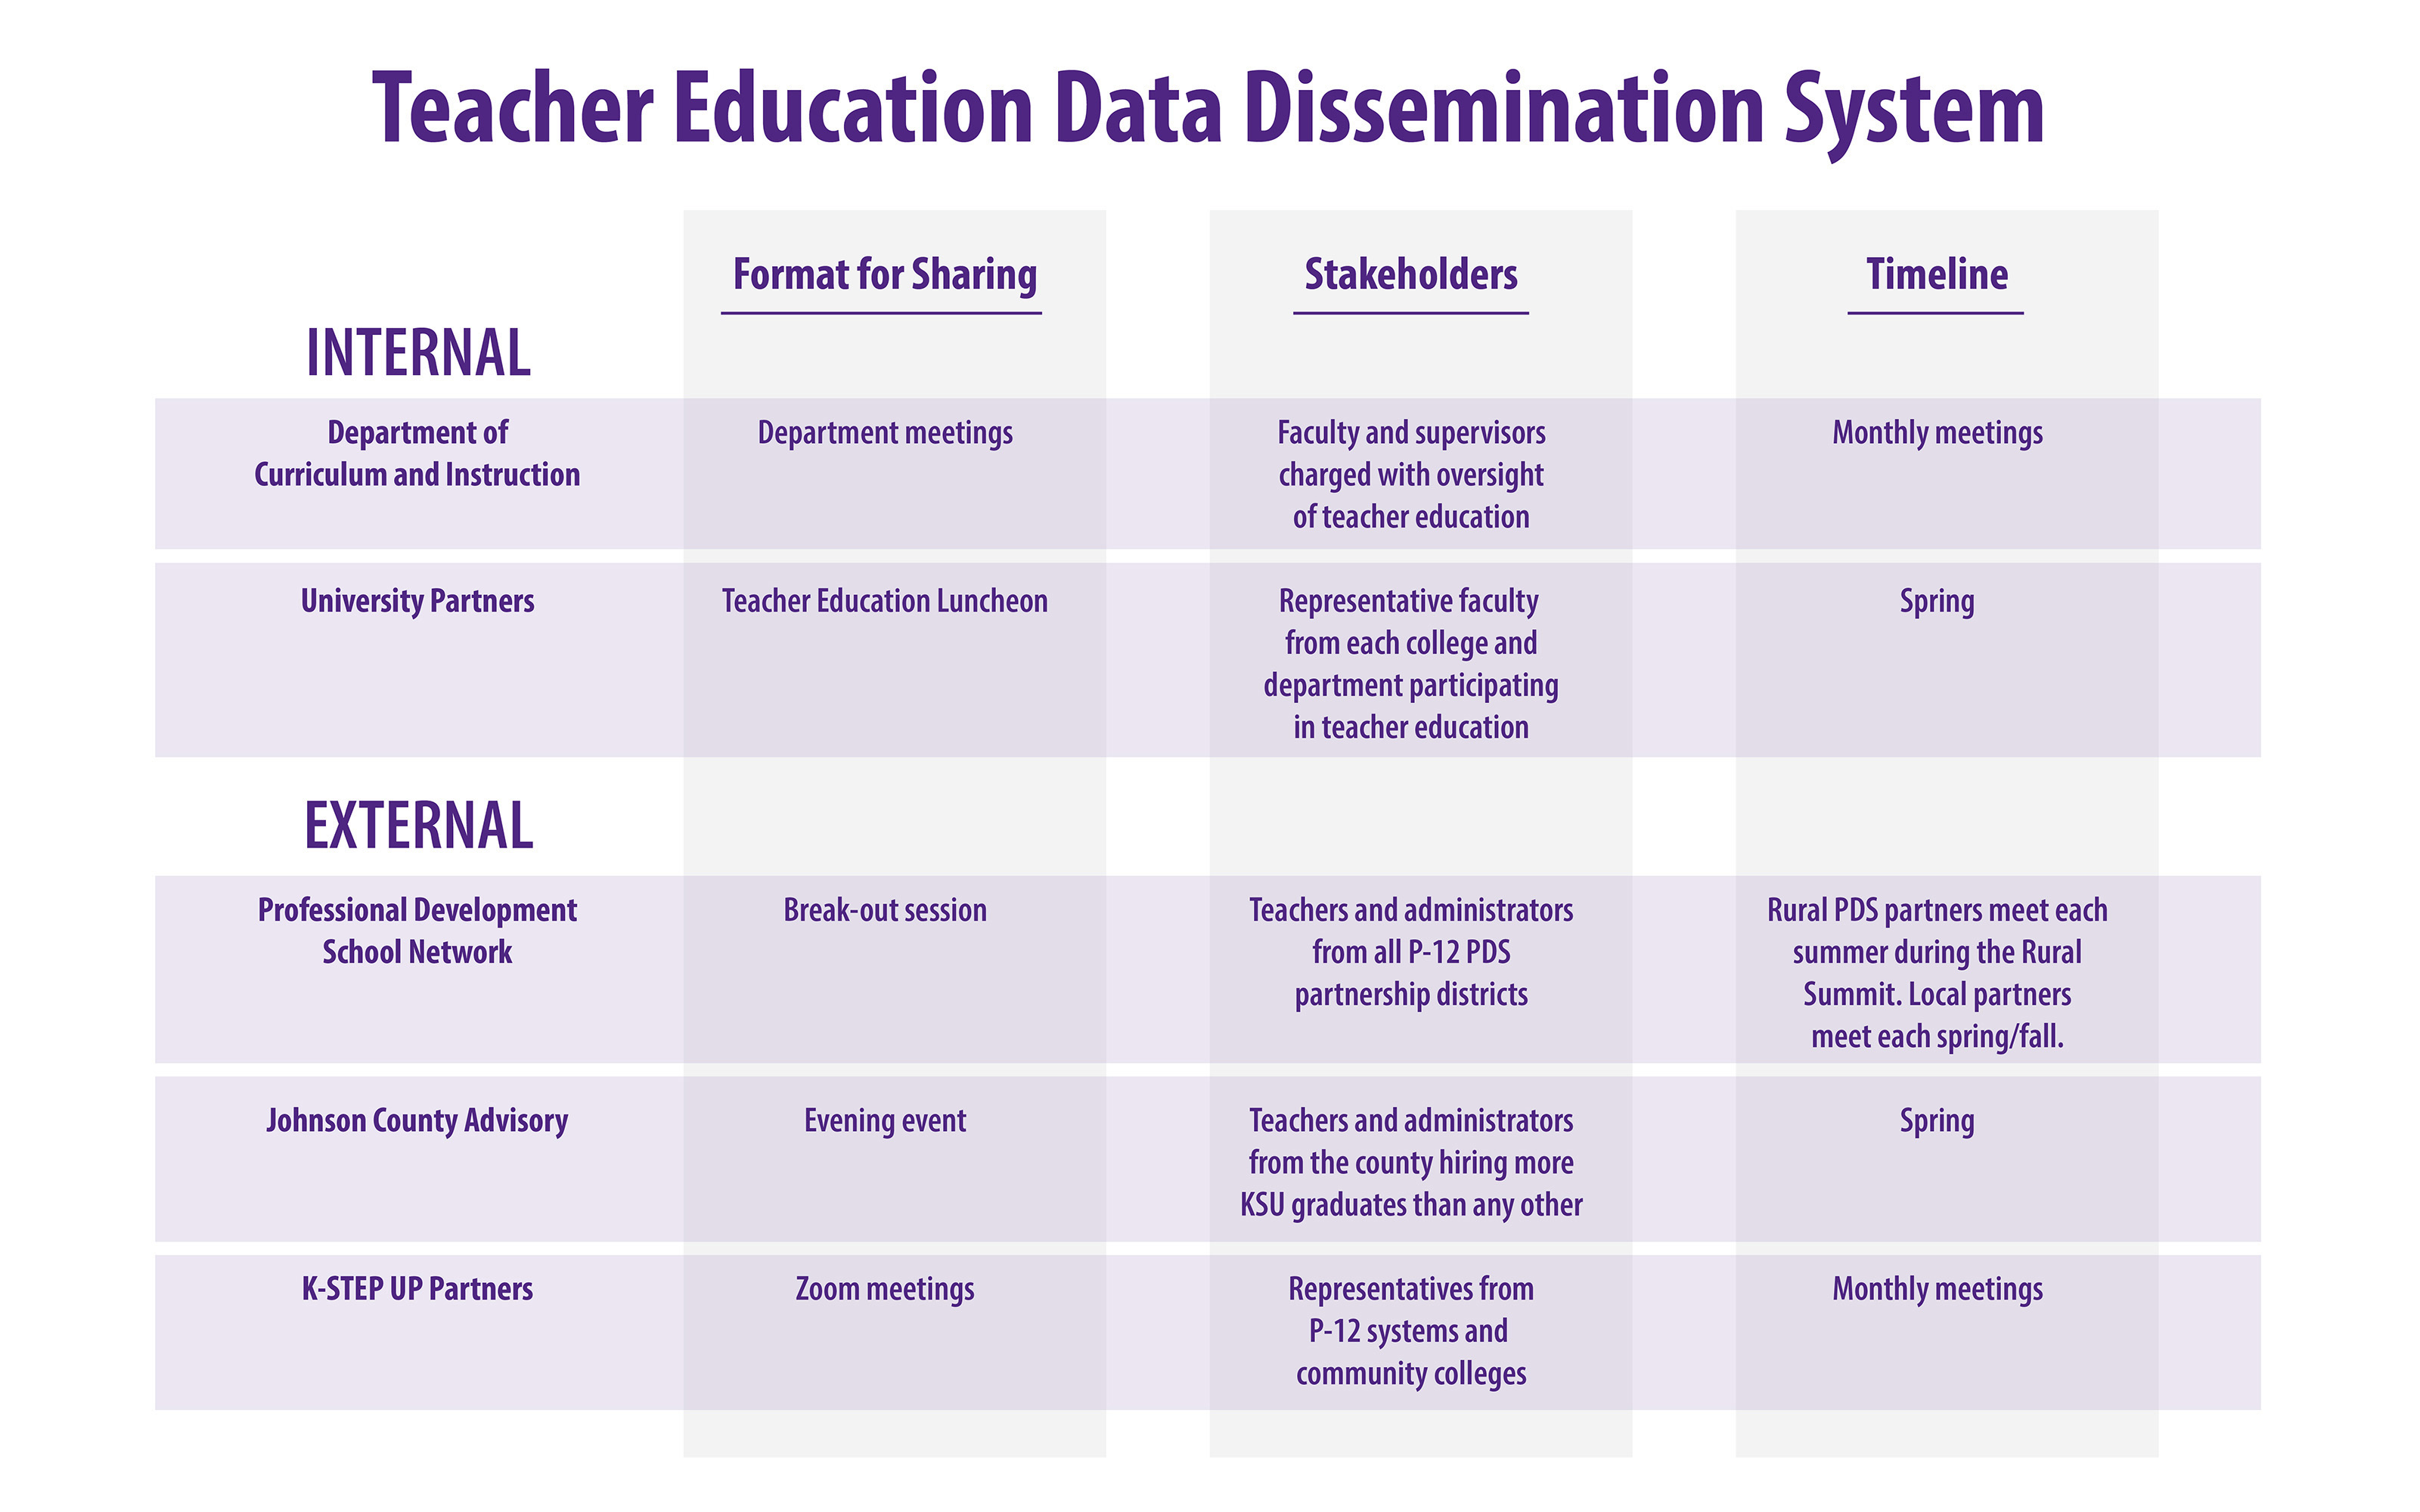 Teacher Education Data Dissemination System chart